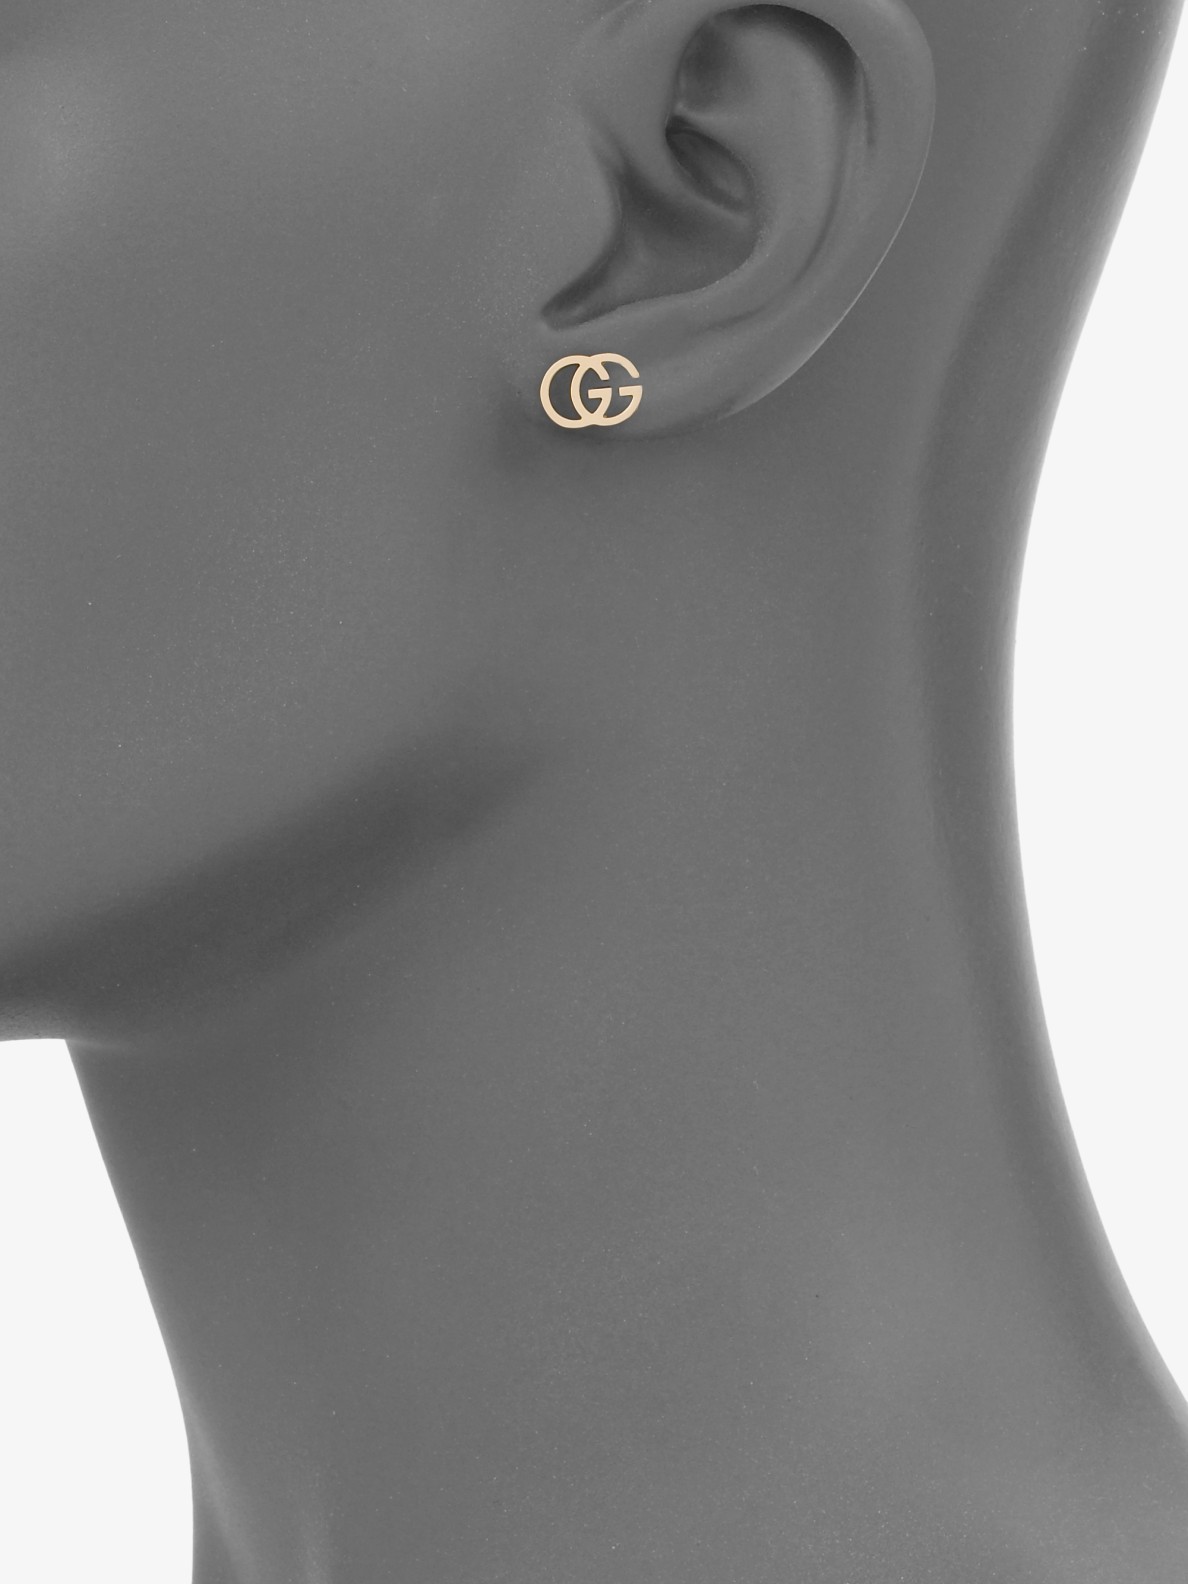 Gucci 18k Yellow Gold Double G Earrings in Metallic | Lyst